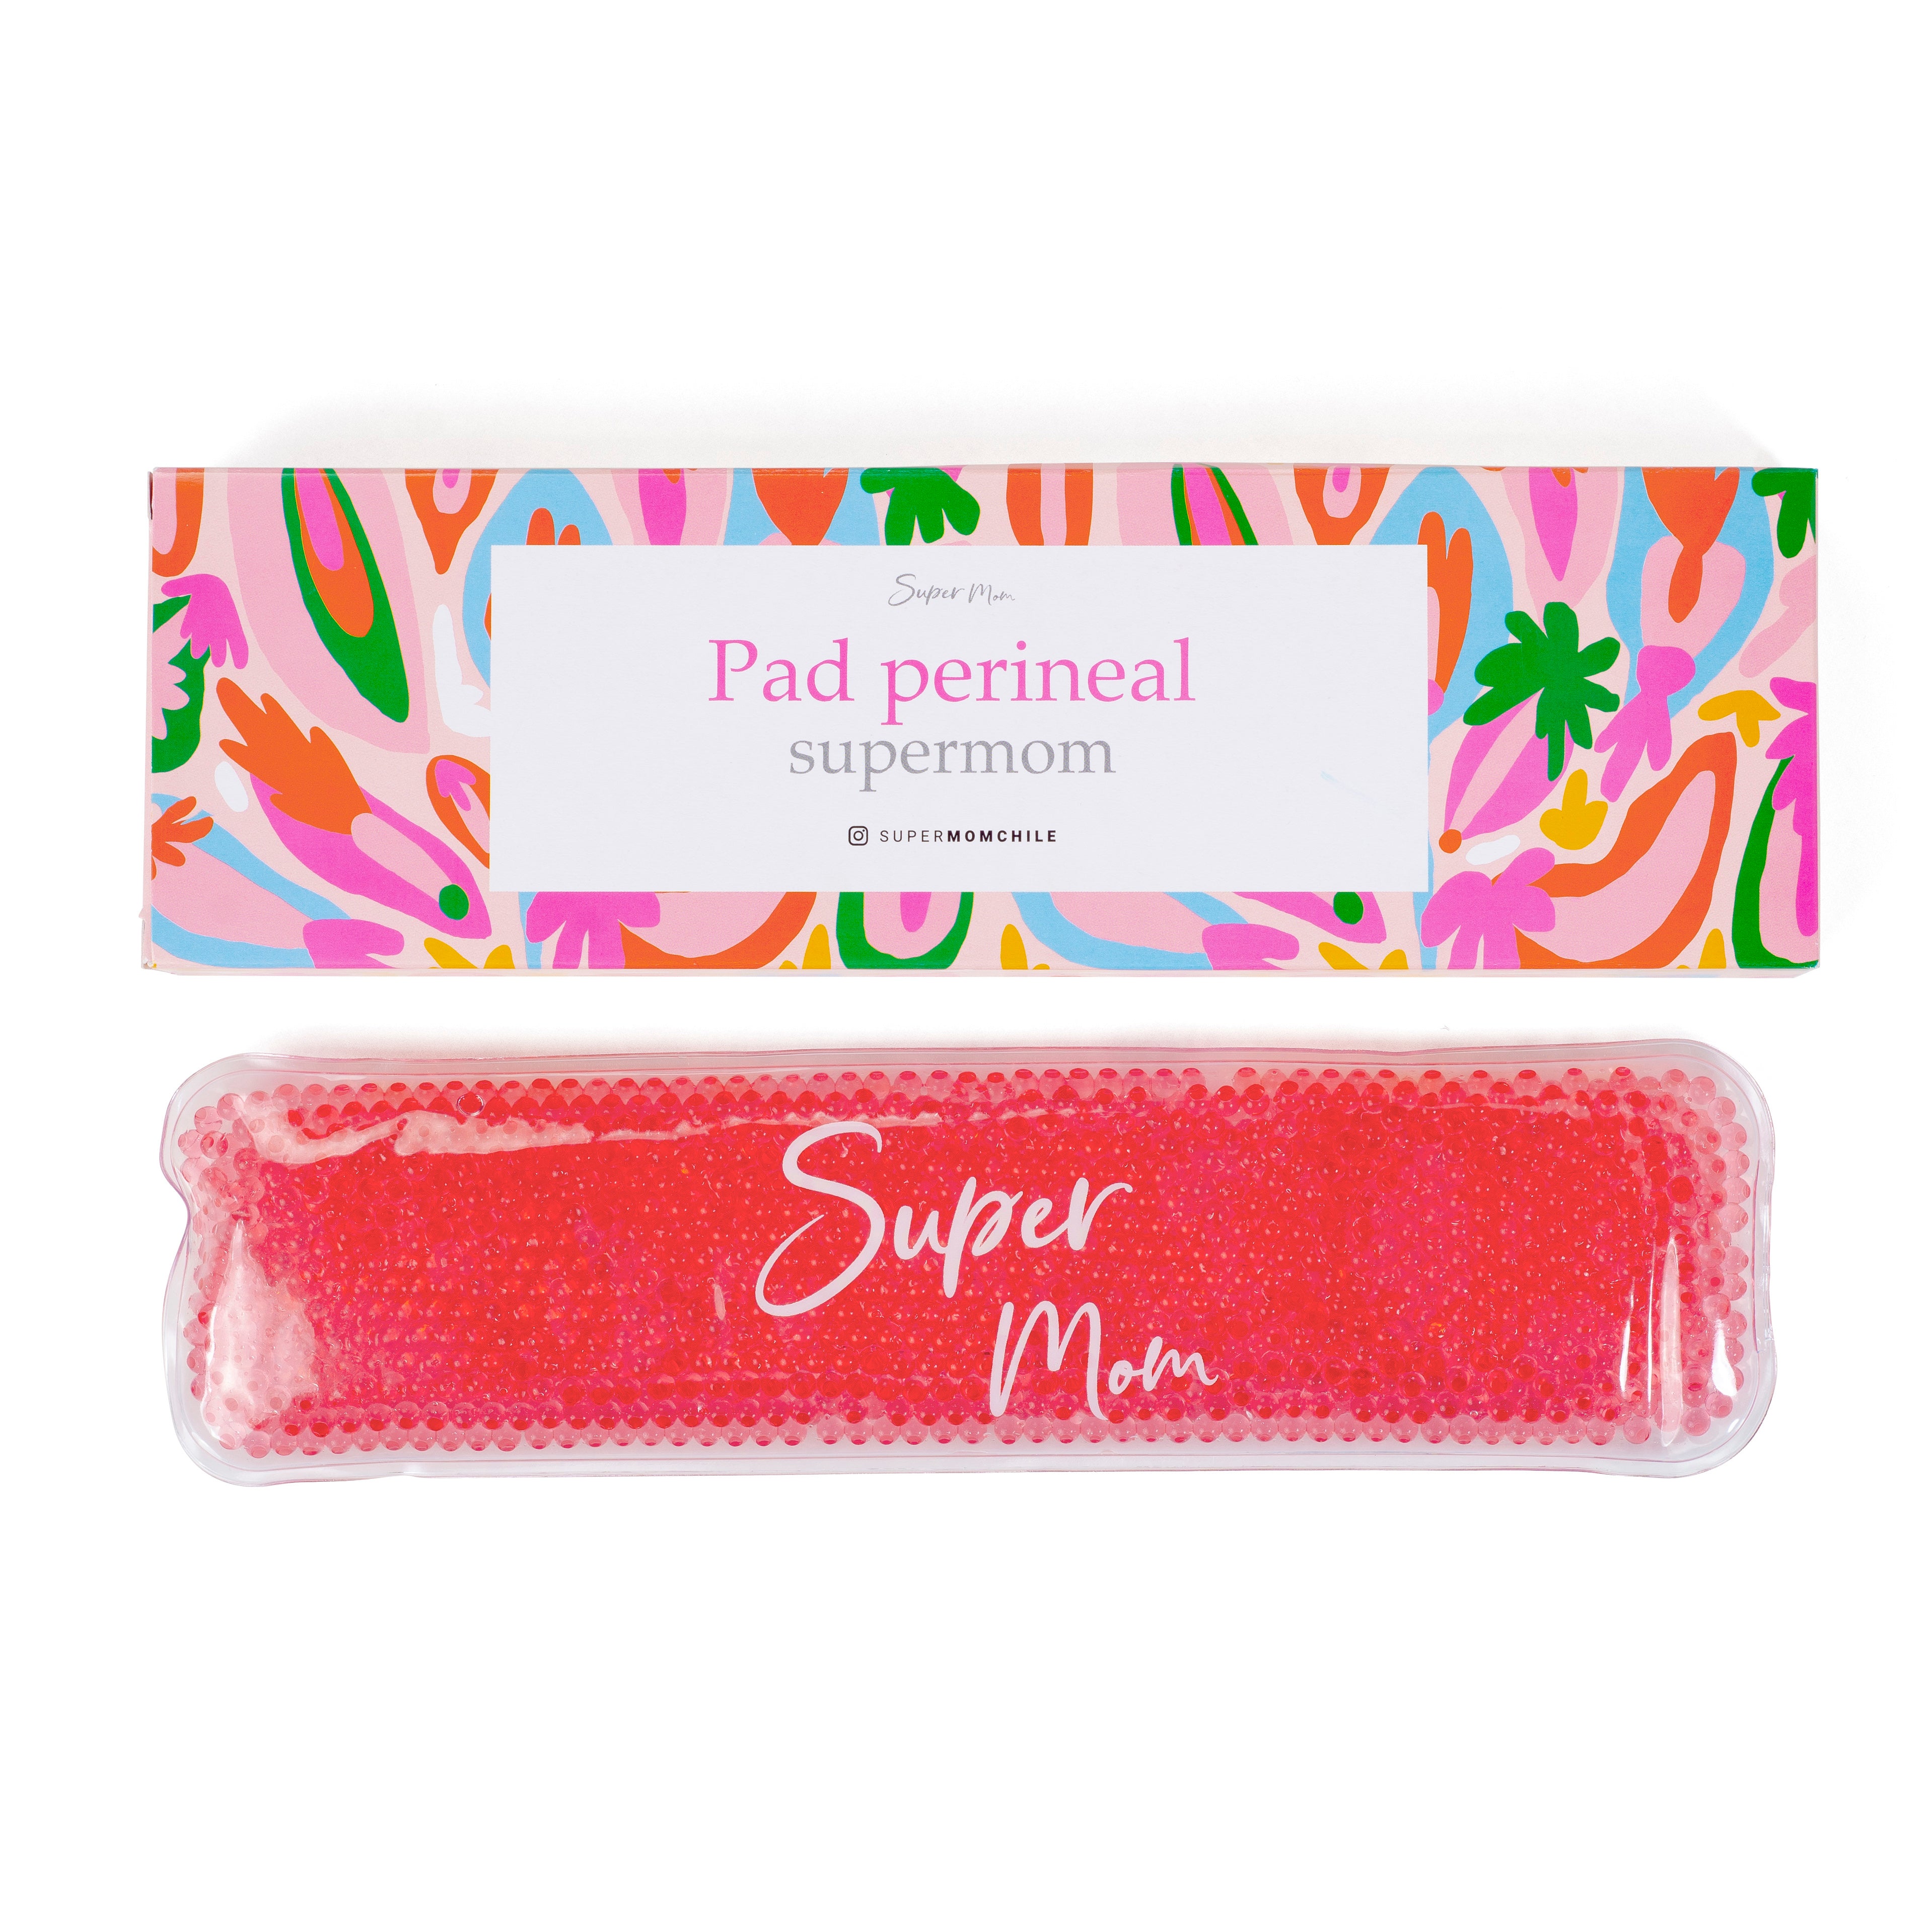 Pad perineal - Supermom